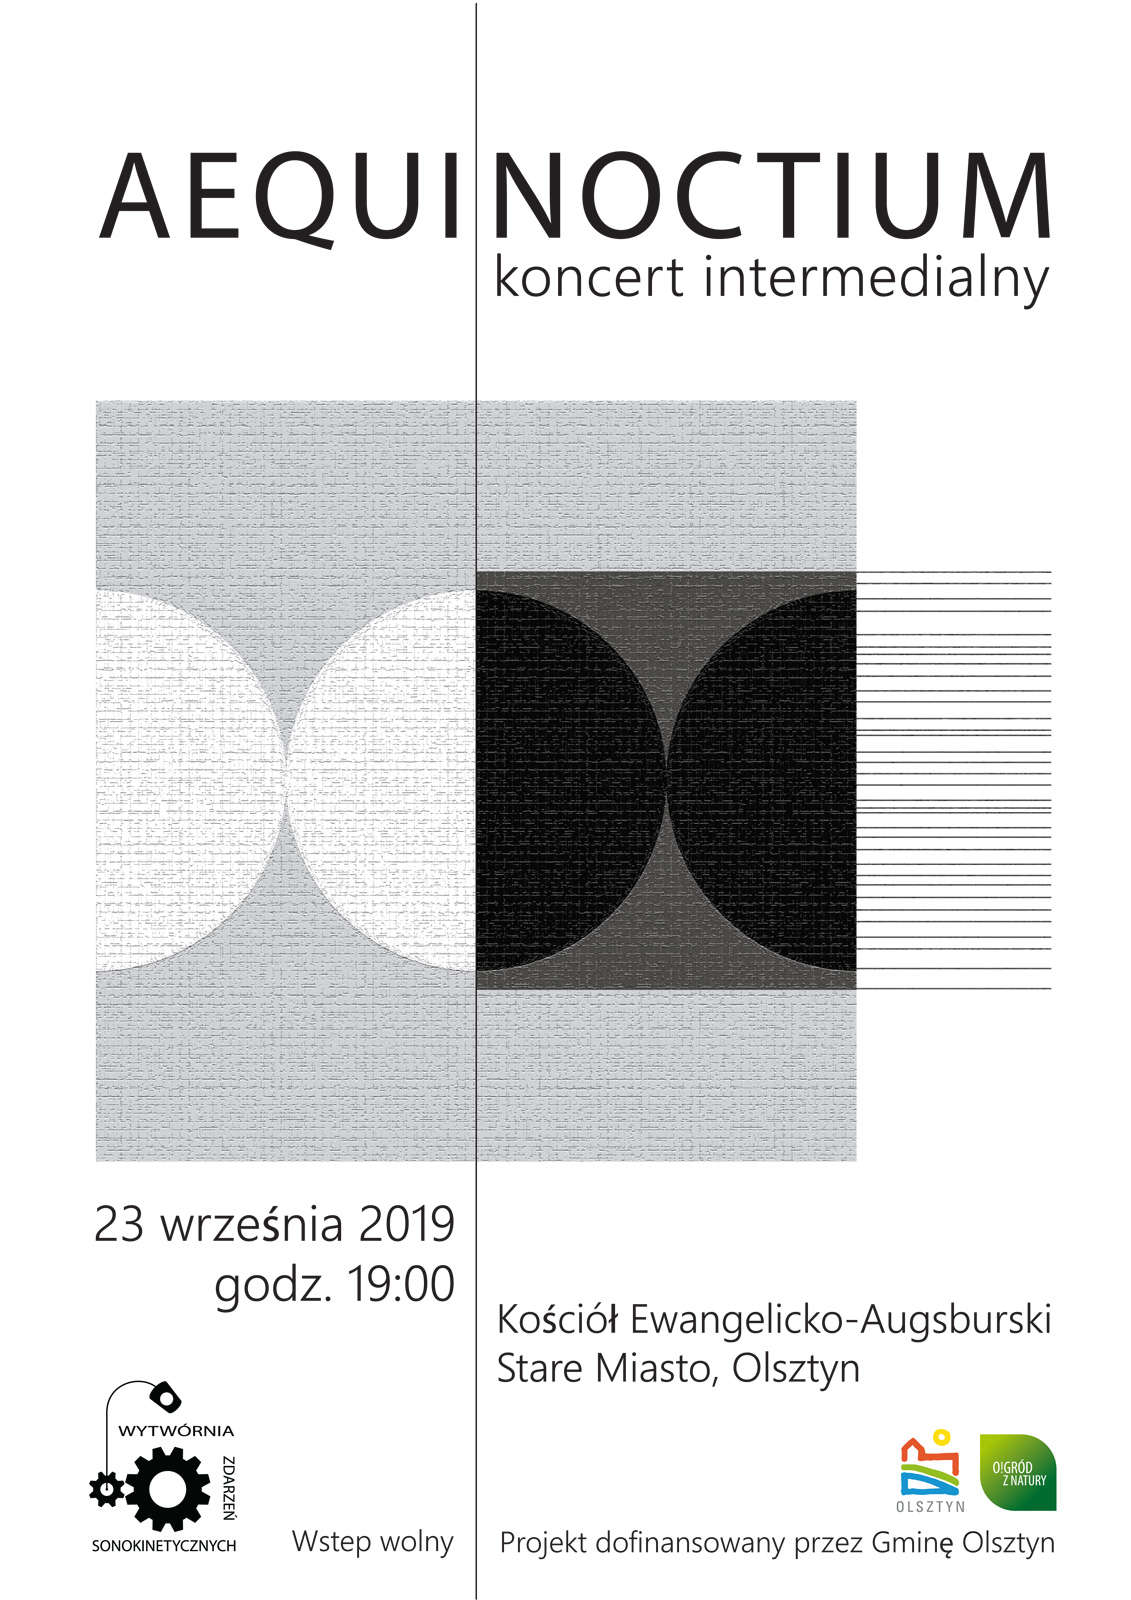 Aequinoctium - „magiczny” koncert intermedialny w Olsztynie - full image